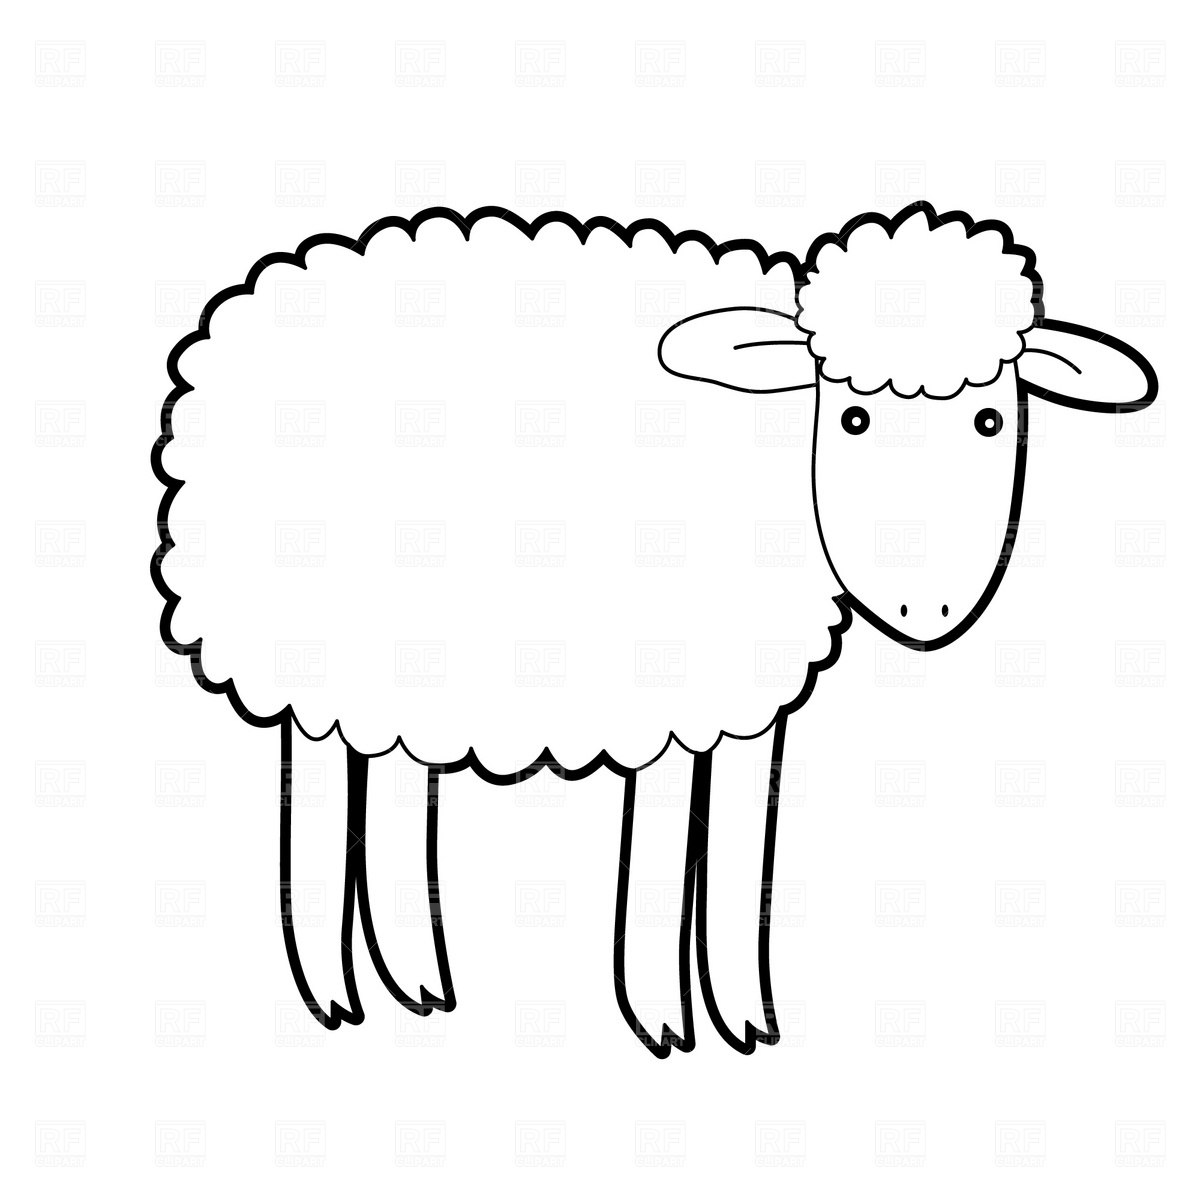 Best Photos of Black Sheep Template - Black Sheep Clip Art, Cotton ...